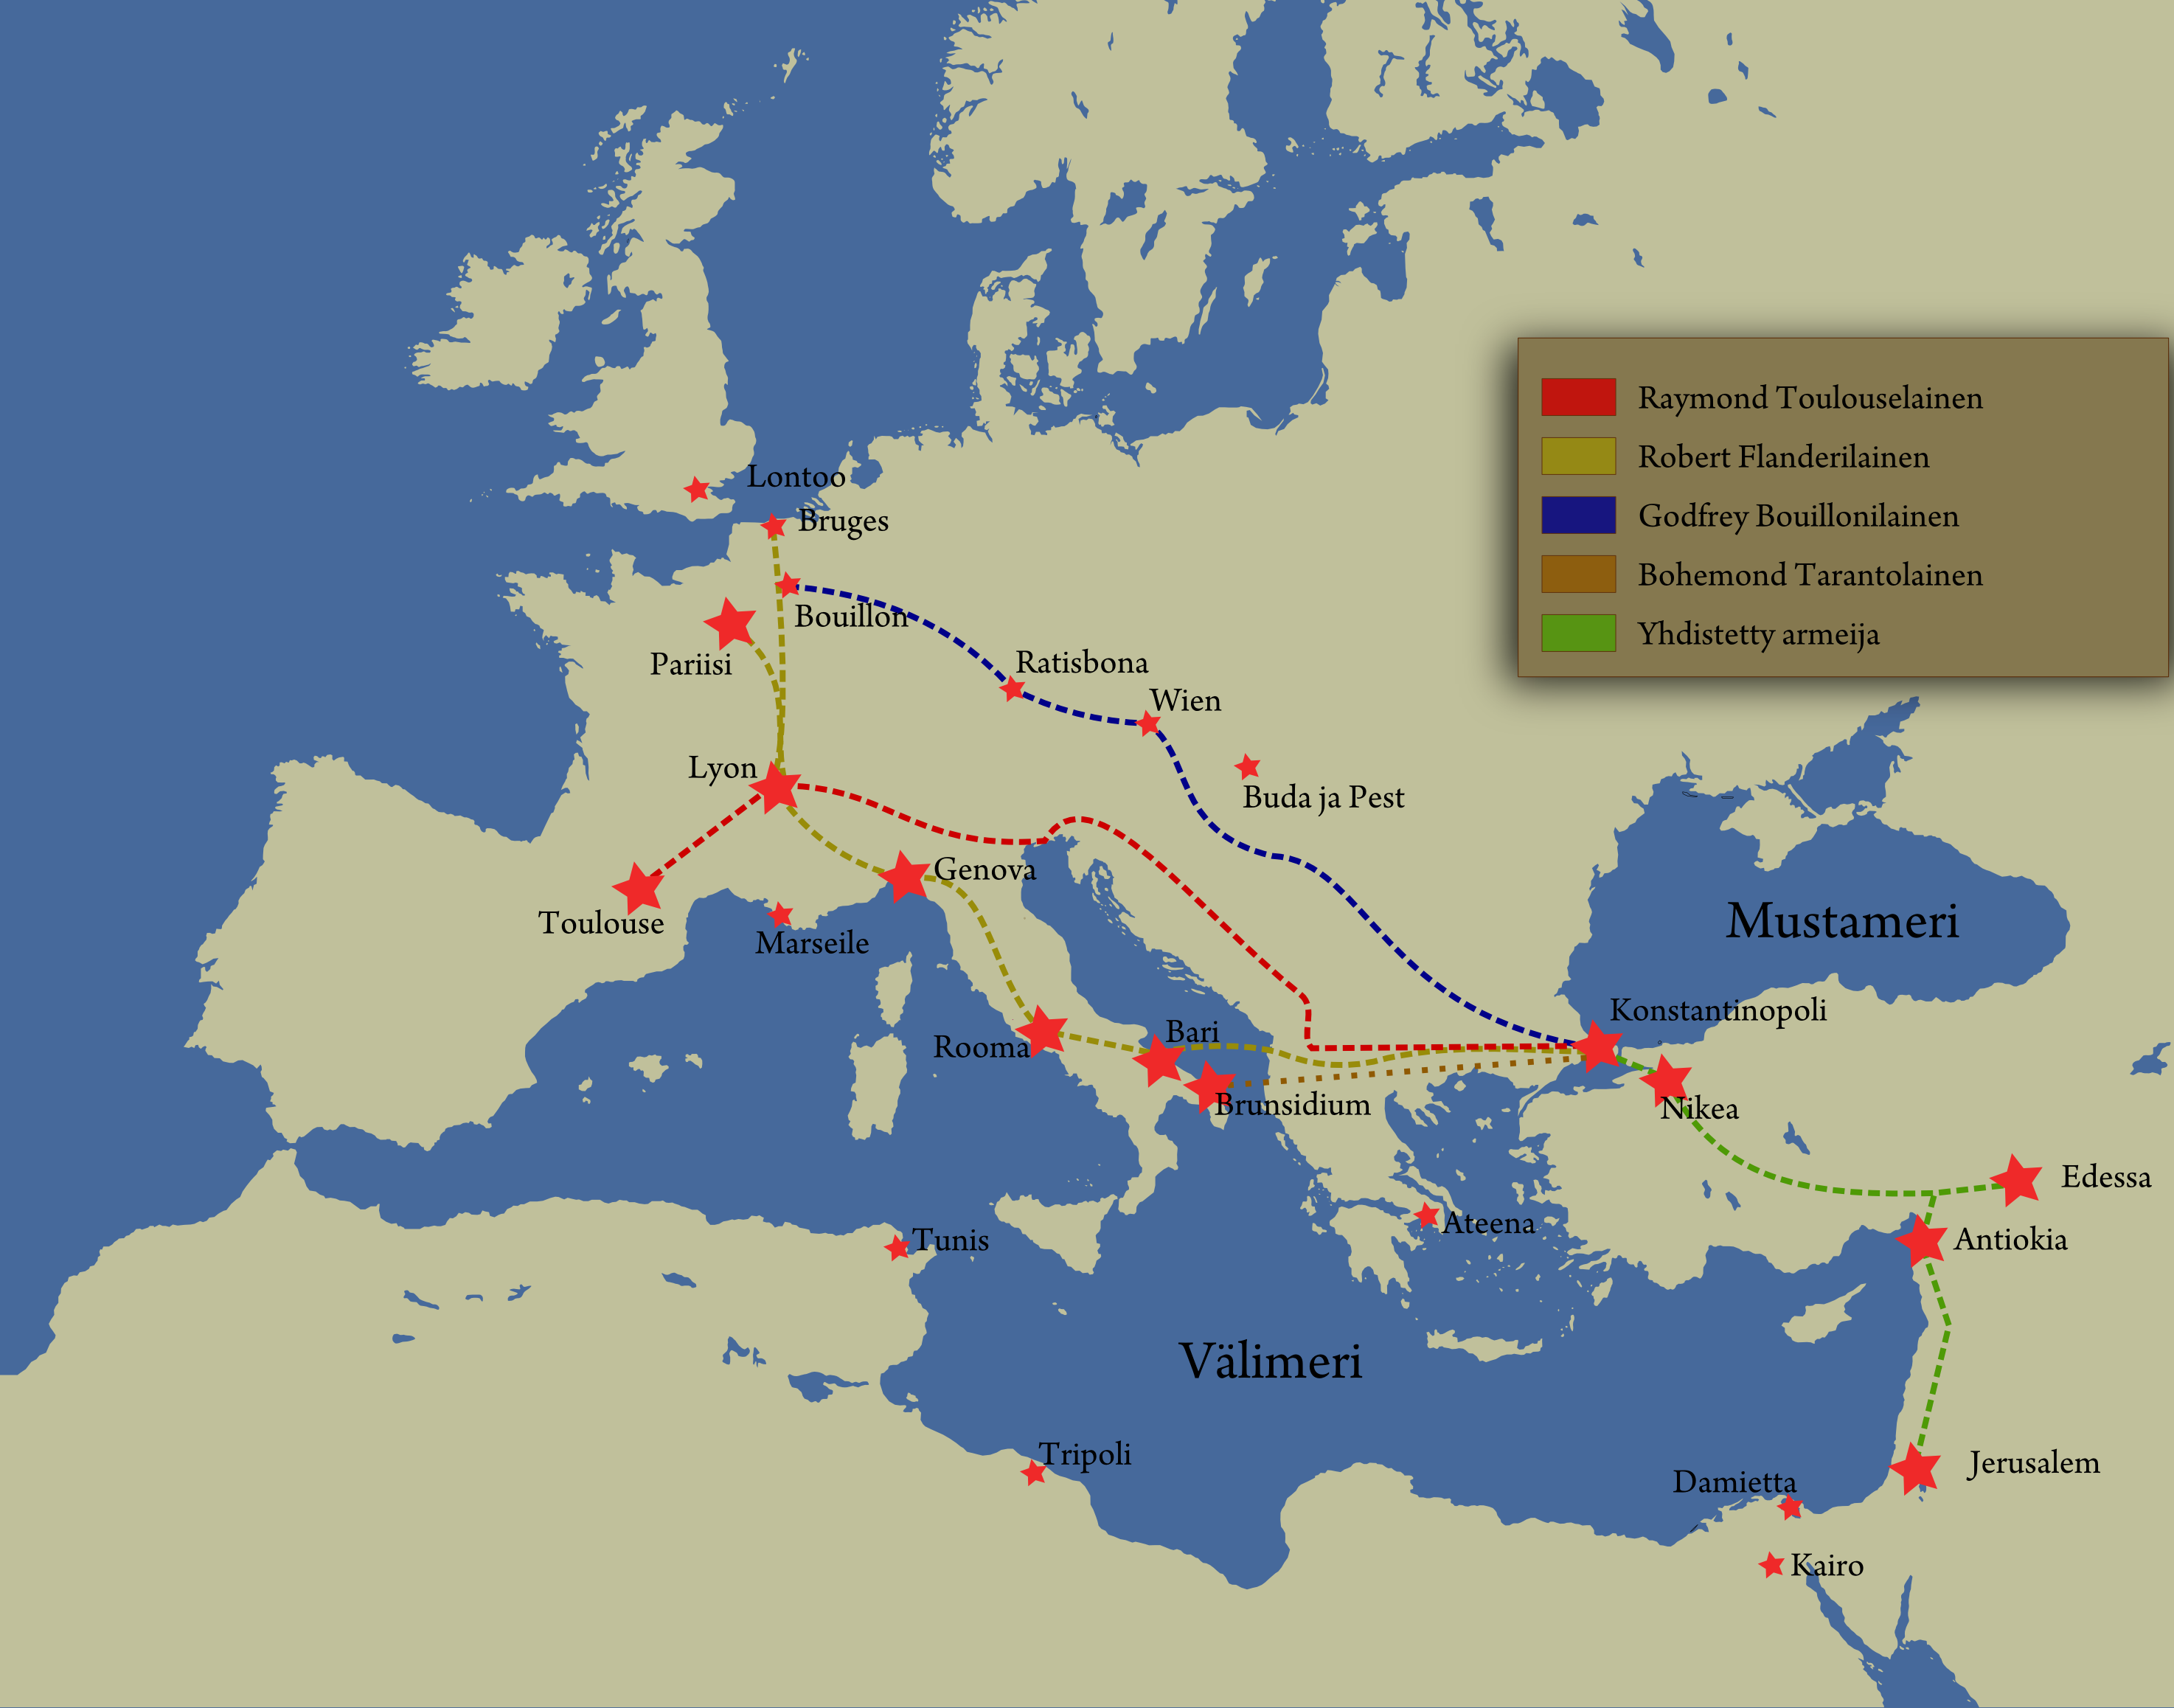 Map of First Crusade   Roads of main armies fi 十字軍、正義の名のもとに集まった伝説の騎士団の資金源とは。